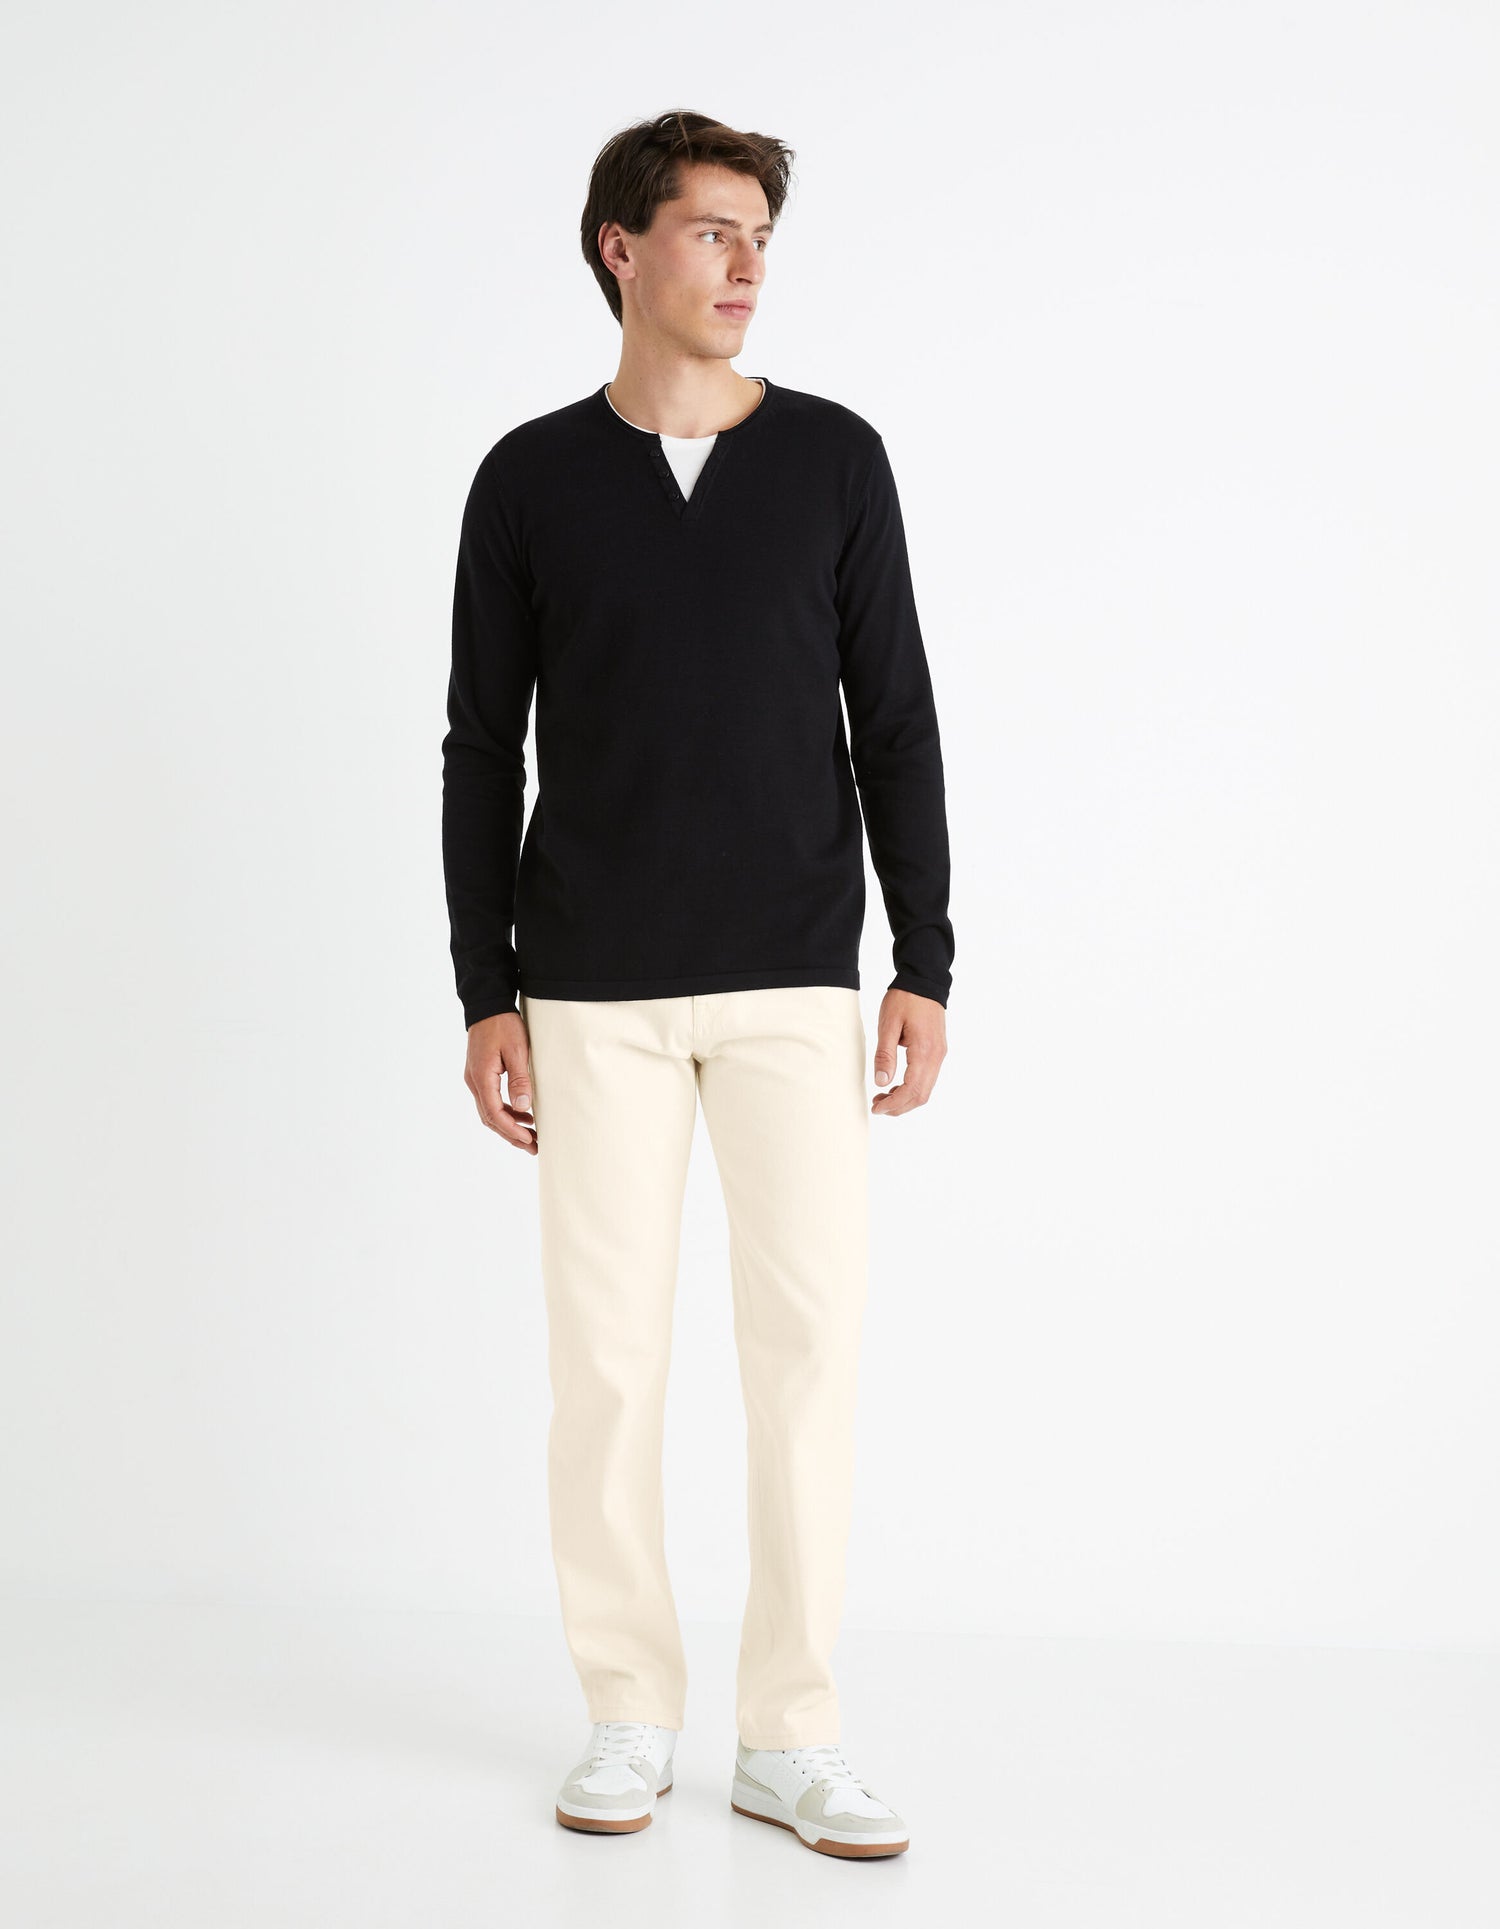 Tunisian Collar Sweater 100% Cotton - Black_FELANO_BLACK_03